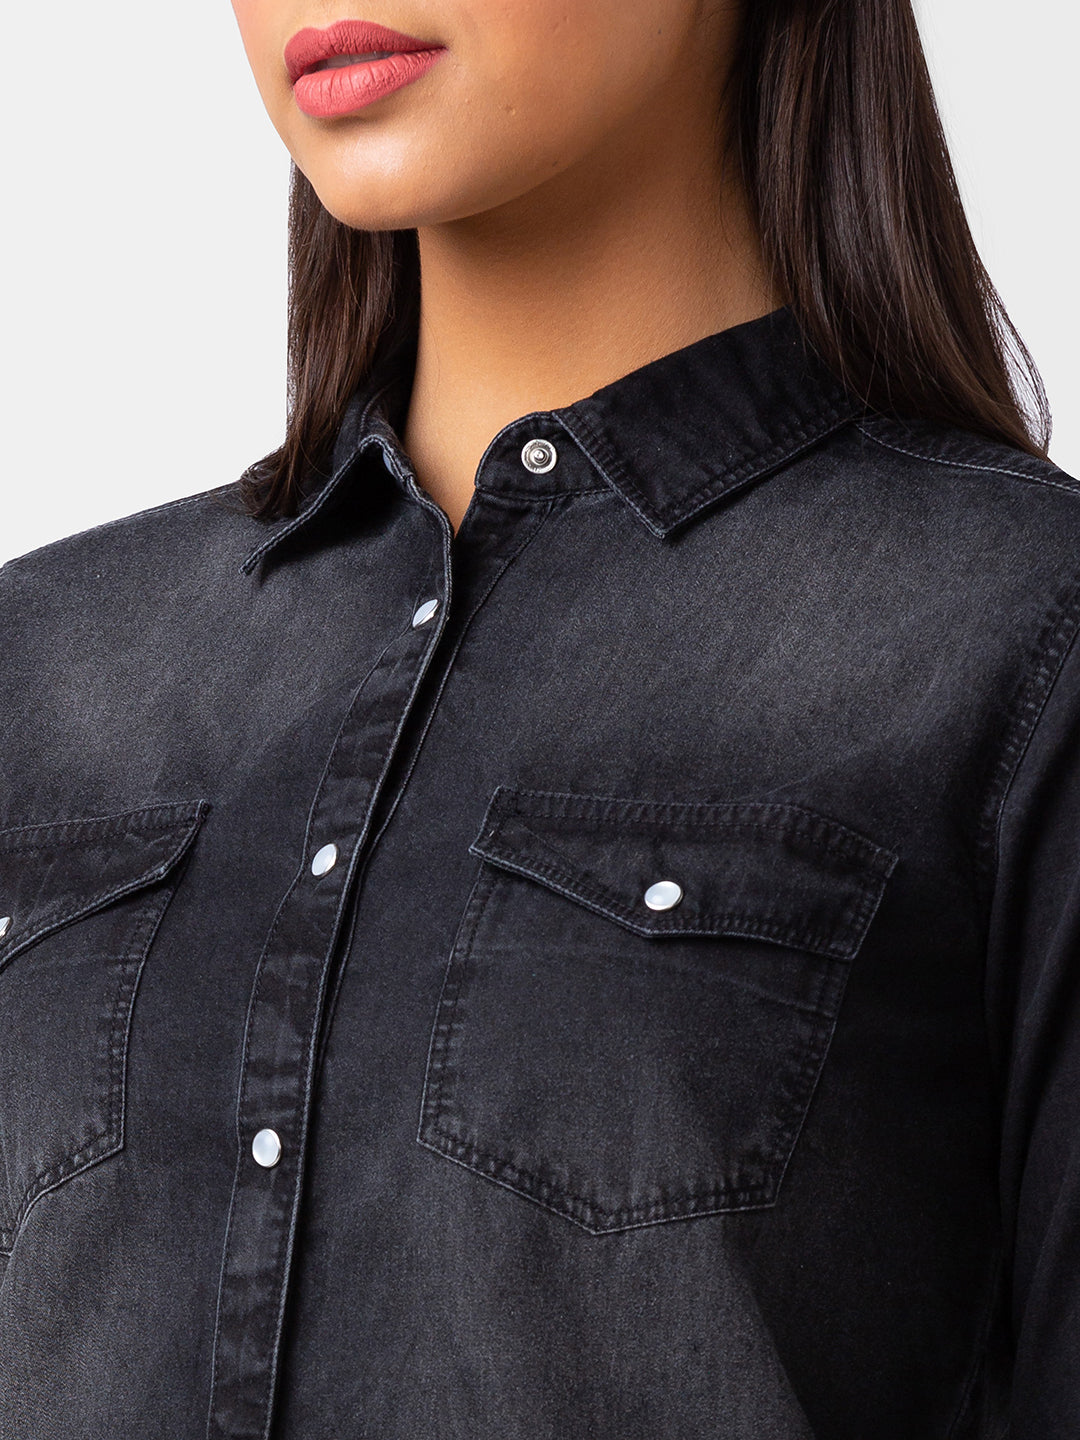 Spykar Women Black Cotton Regular Fit Denim Shirts